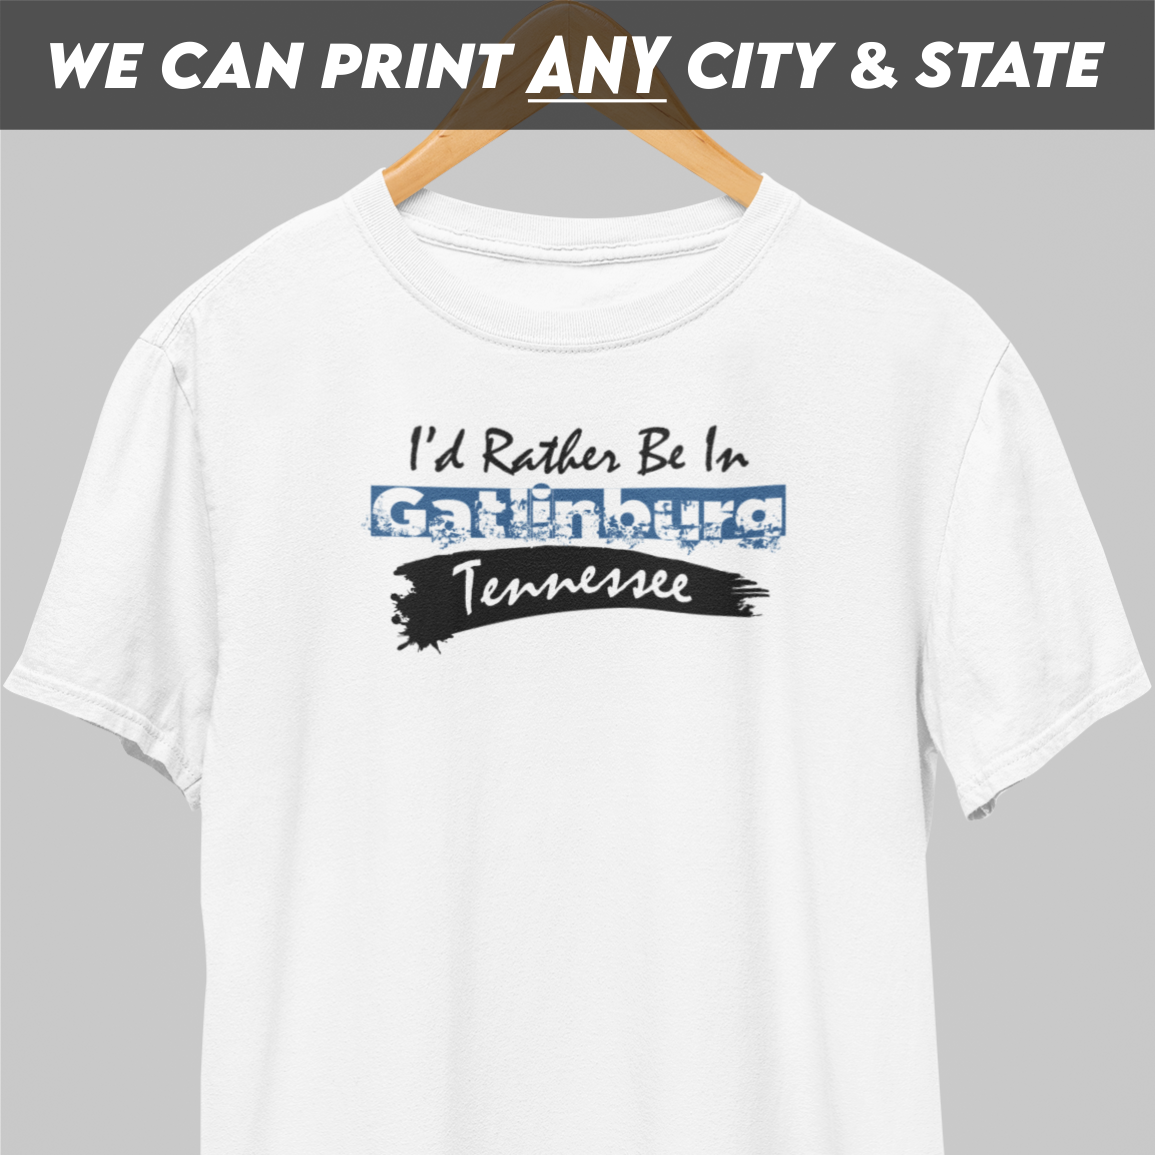 I'd Rather Be In Gatlinburg Swoosh T-Shirt